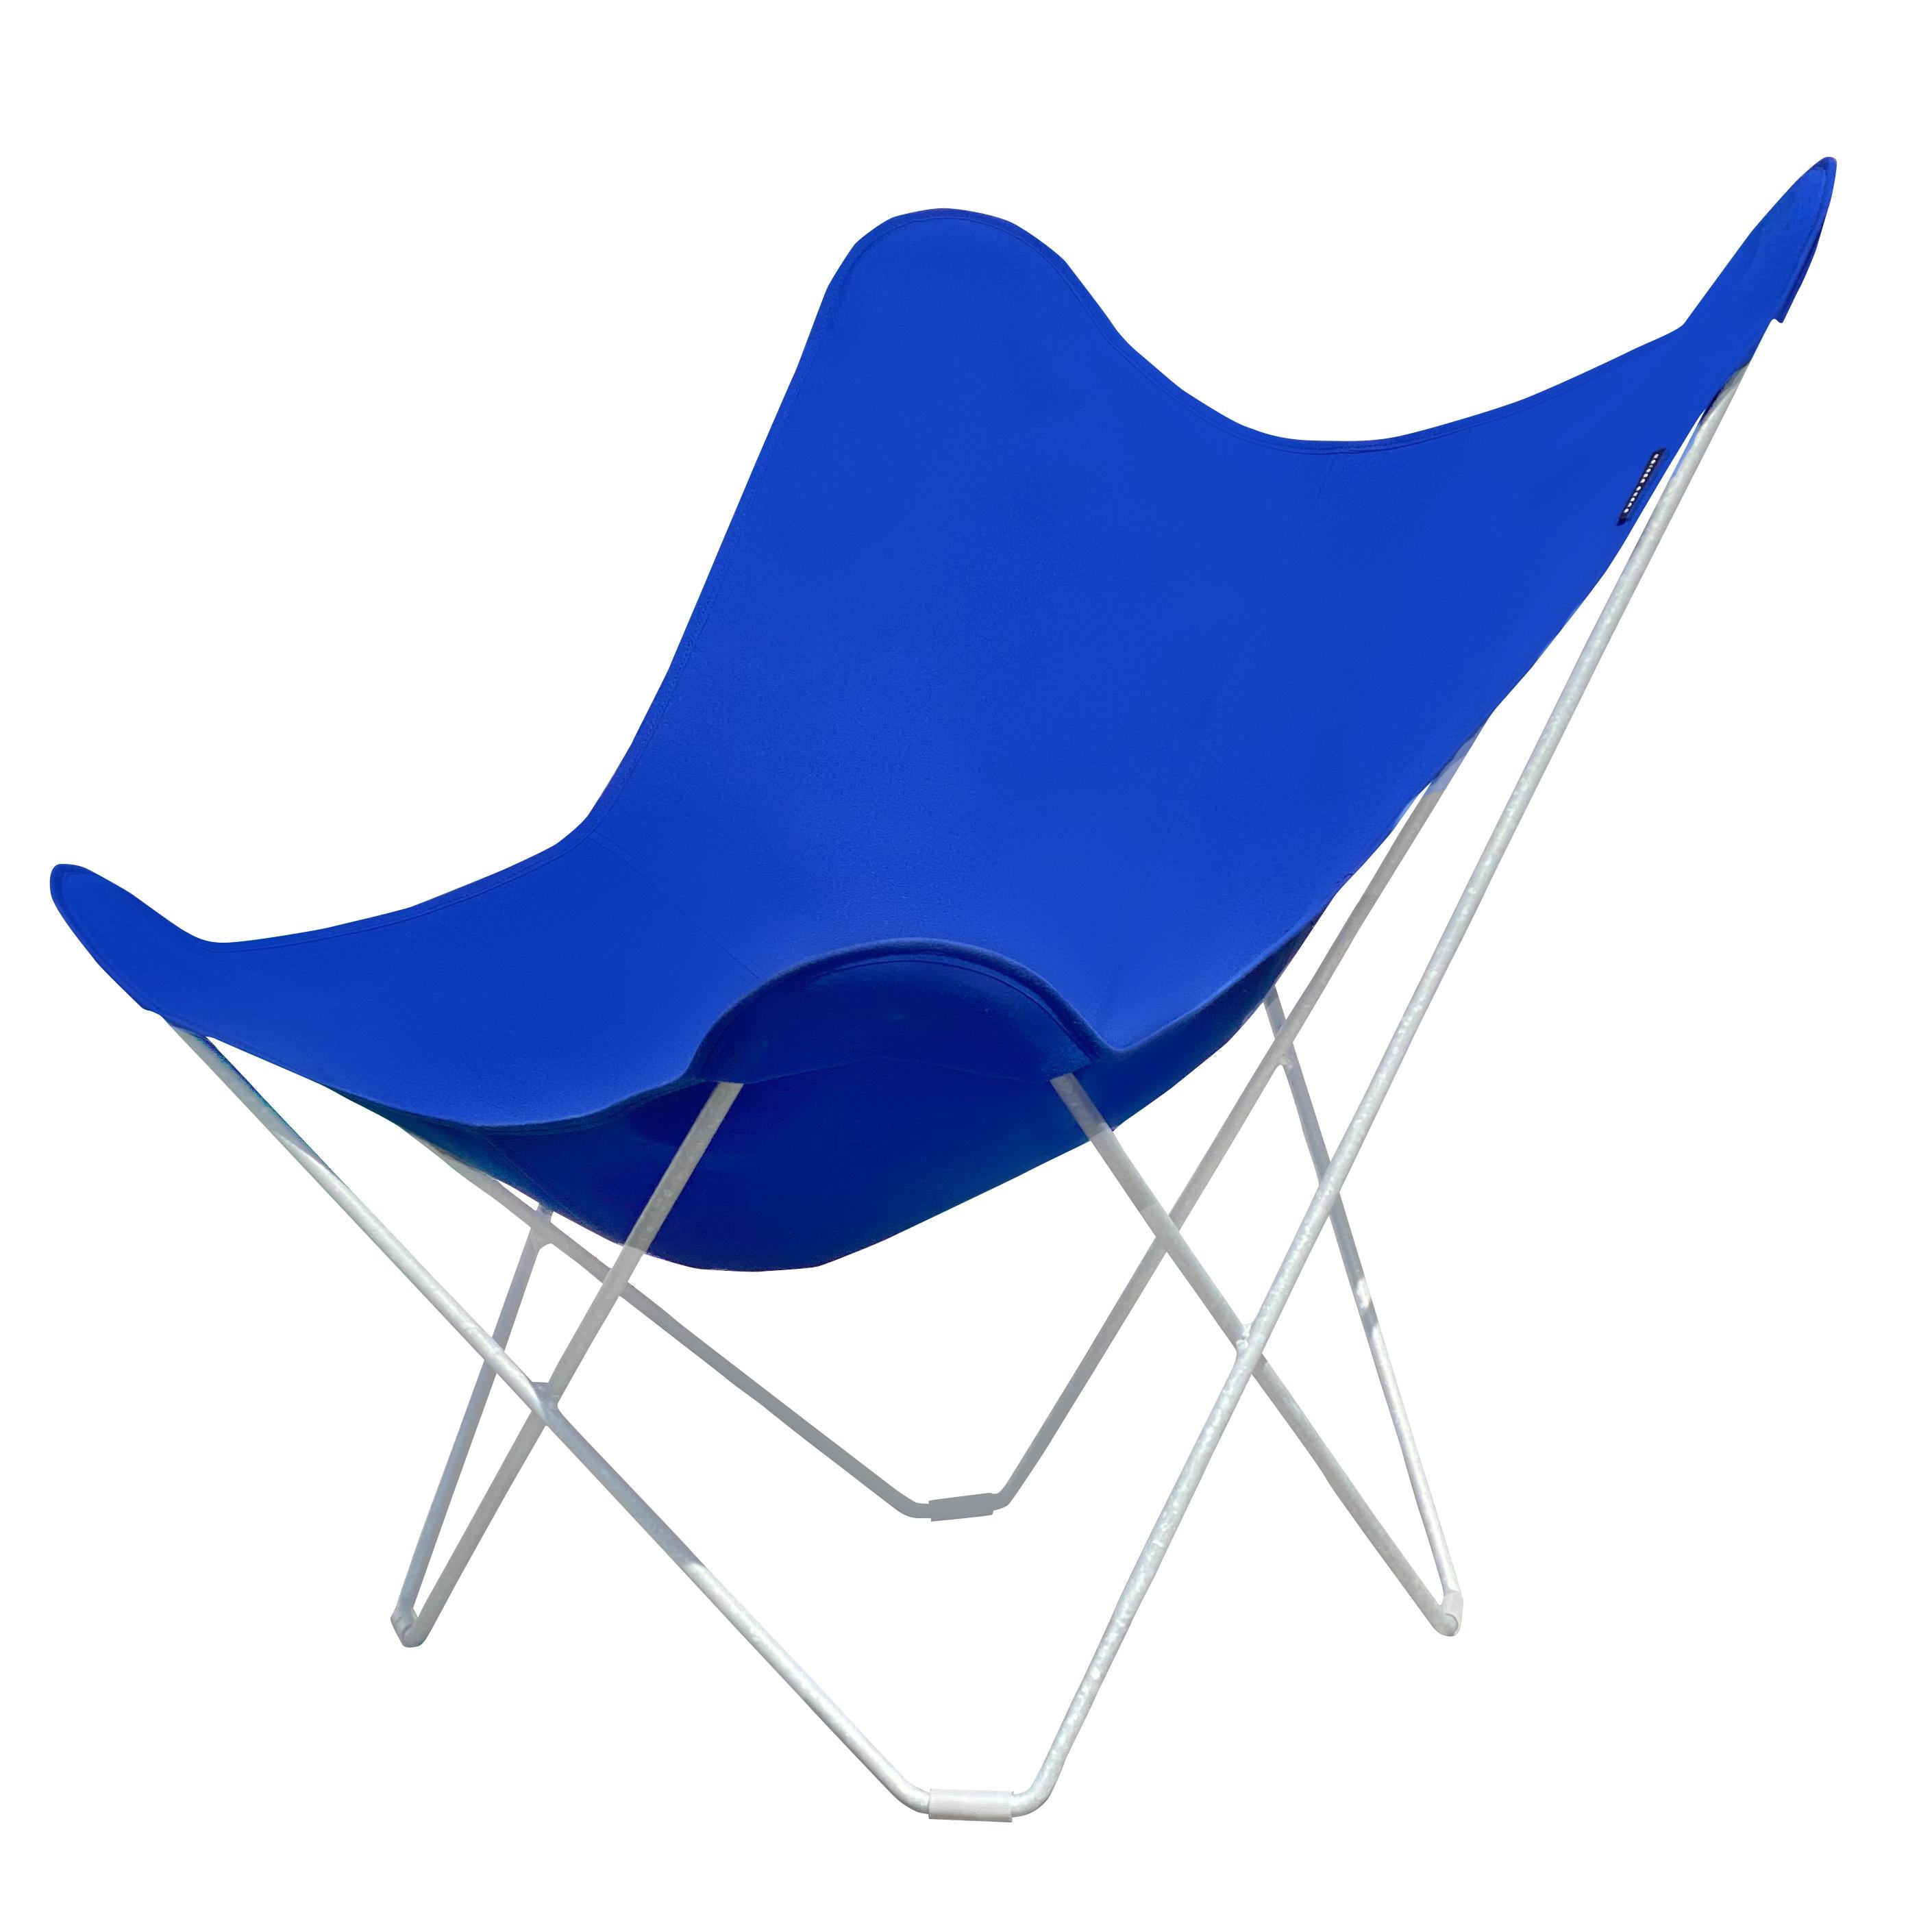 Cuero Sunshine Mariposa Butterfly Chair, Atlantic Blue/Gray Outdoor Frame